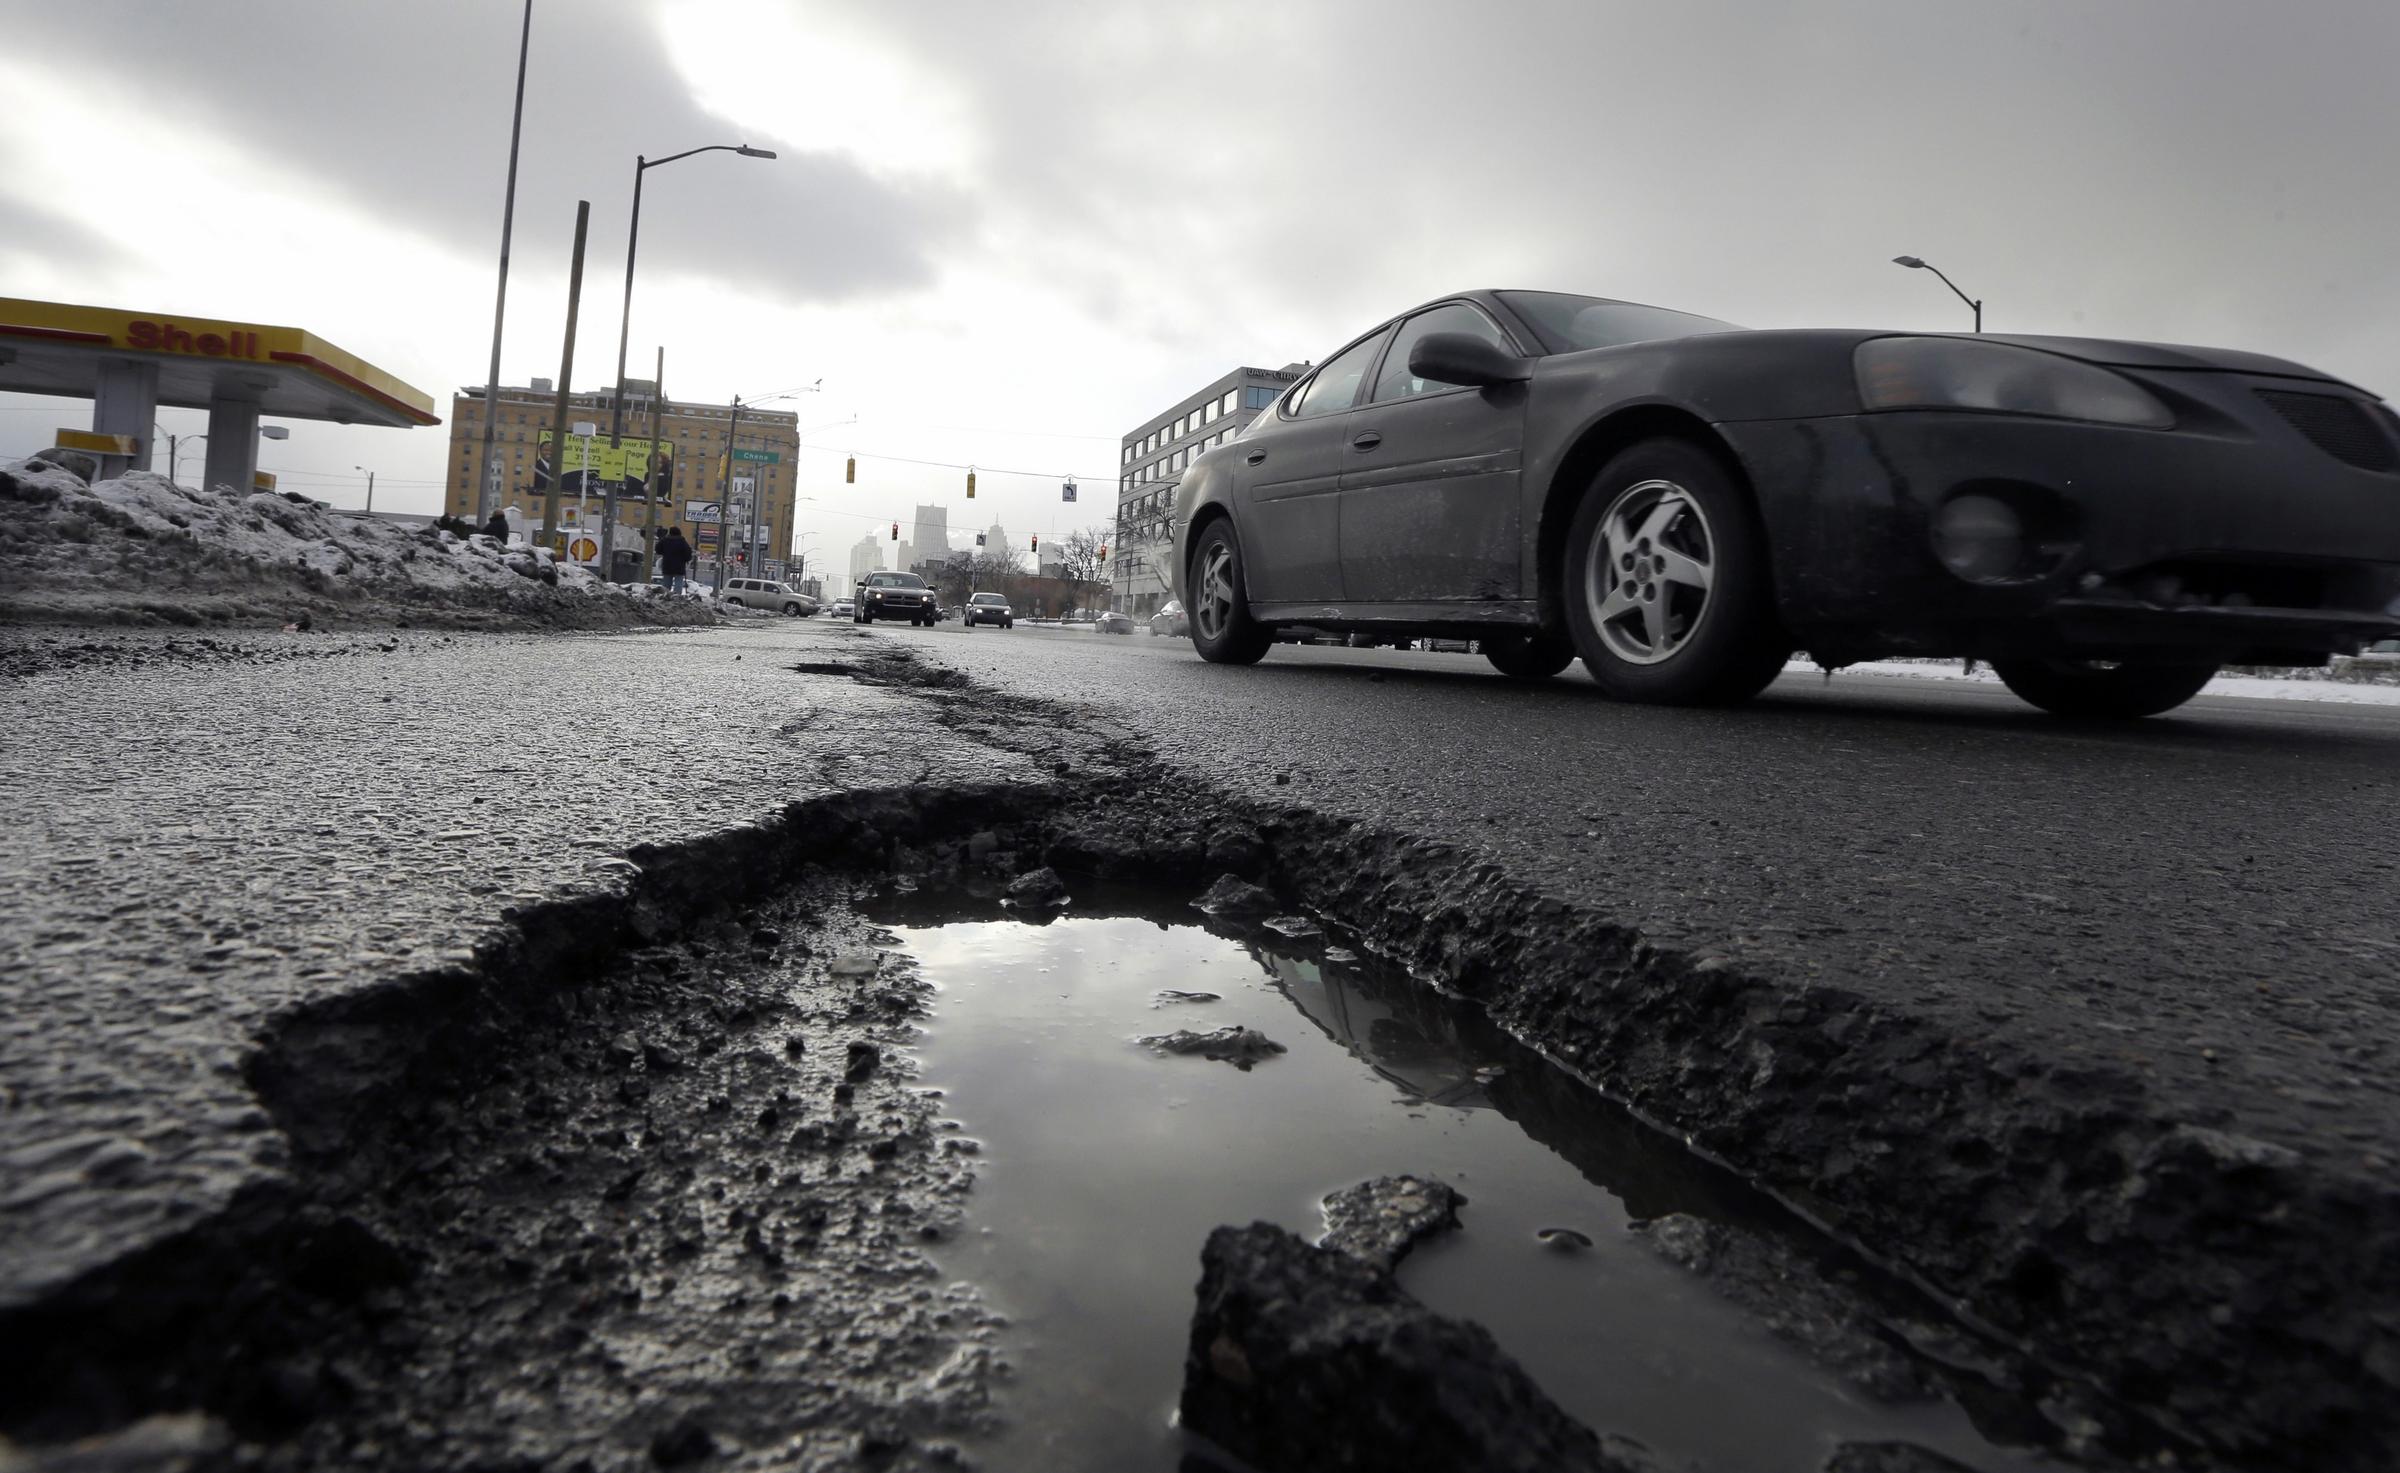 Potholes Grid Failures Aging Tunnels And Bridges Nation S